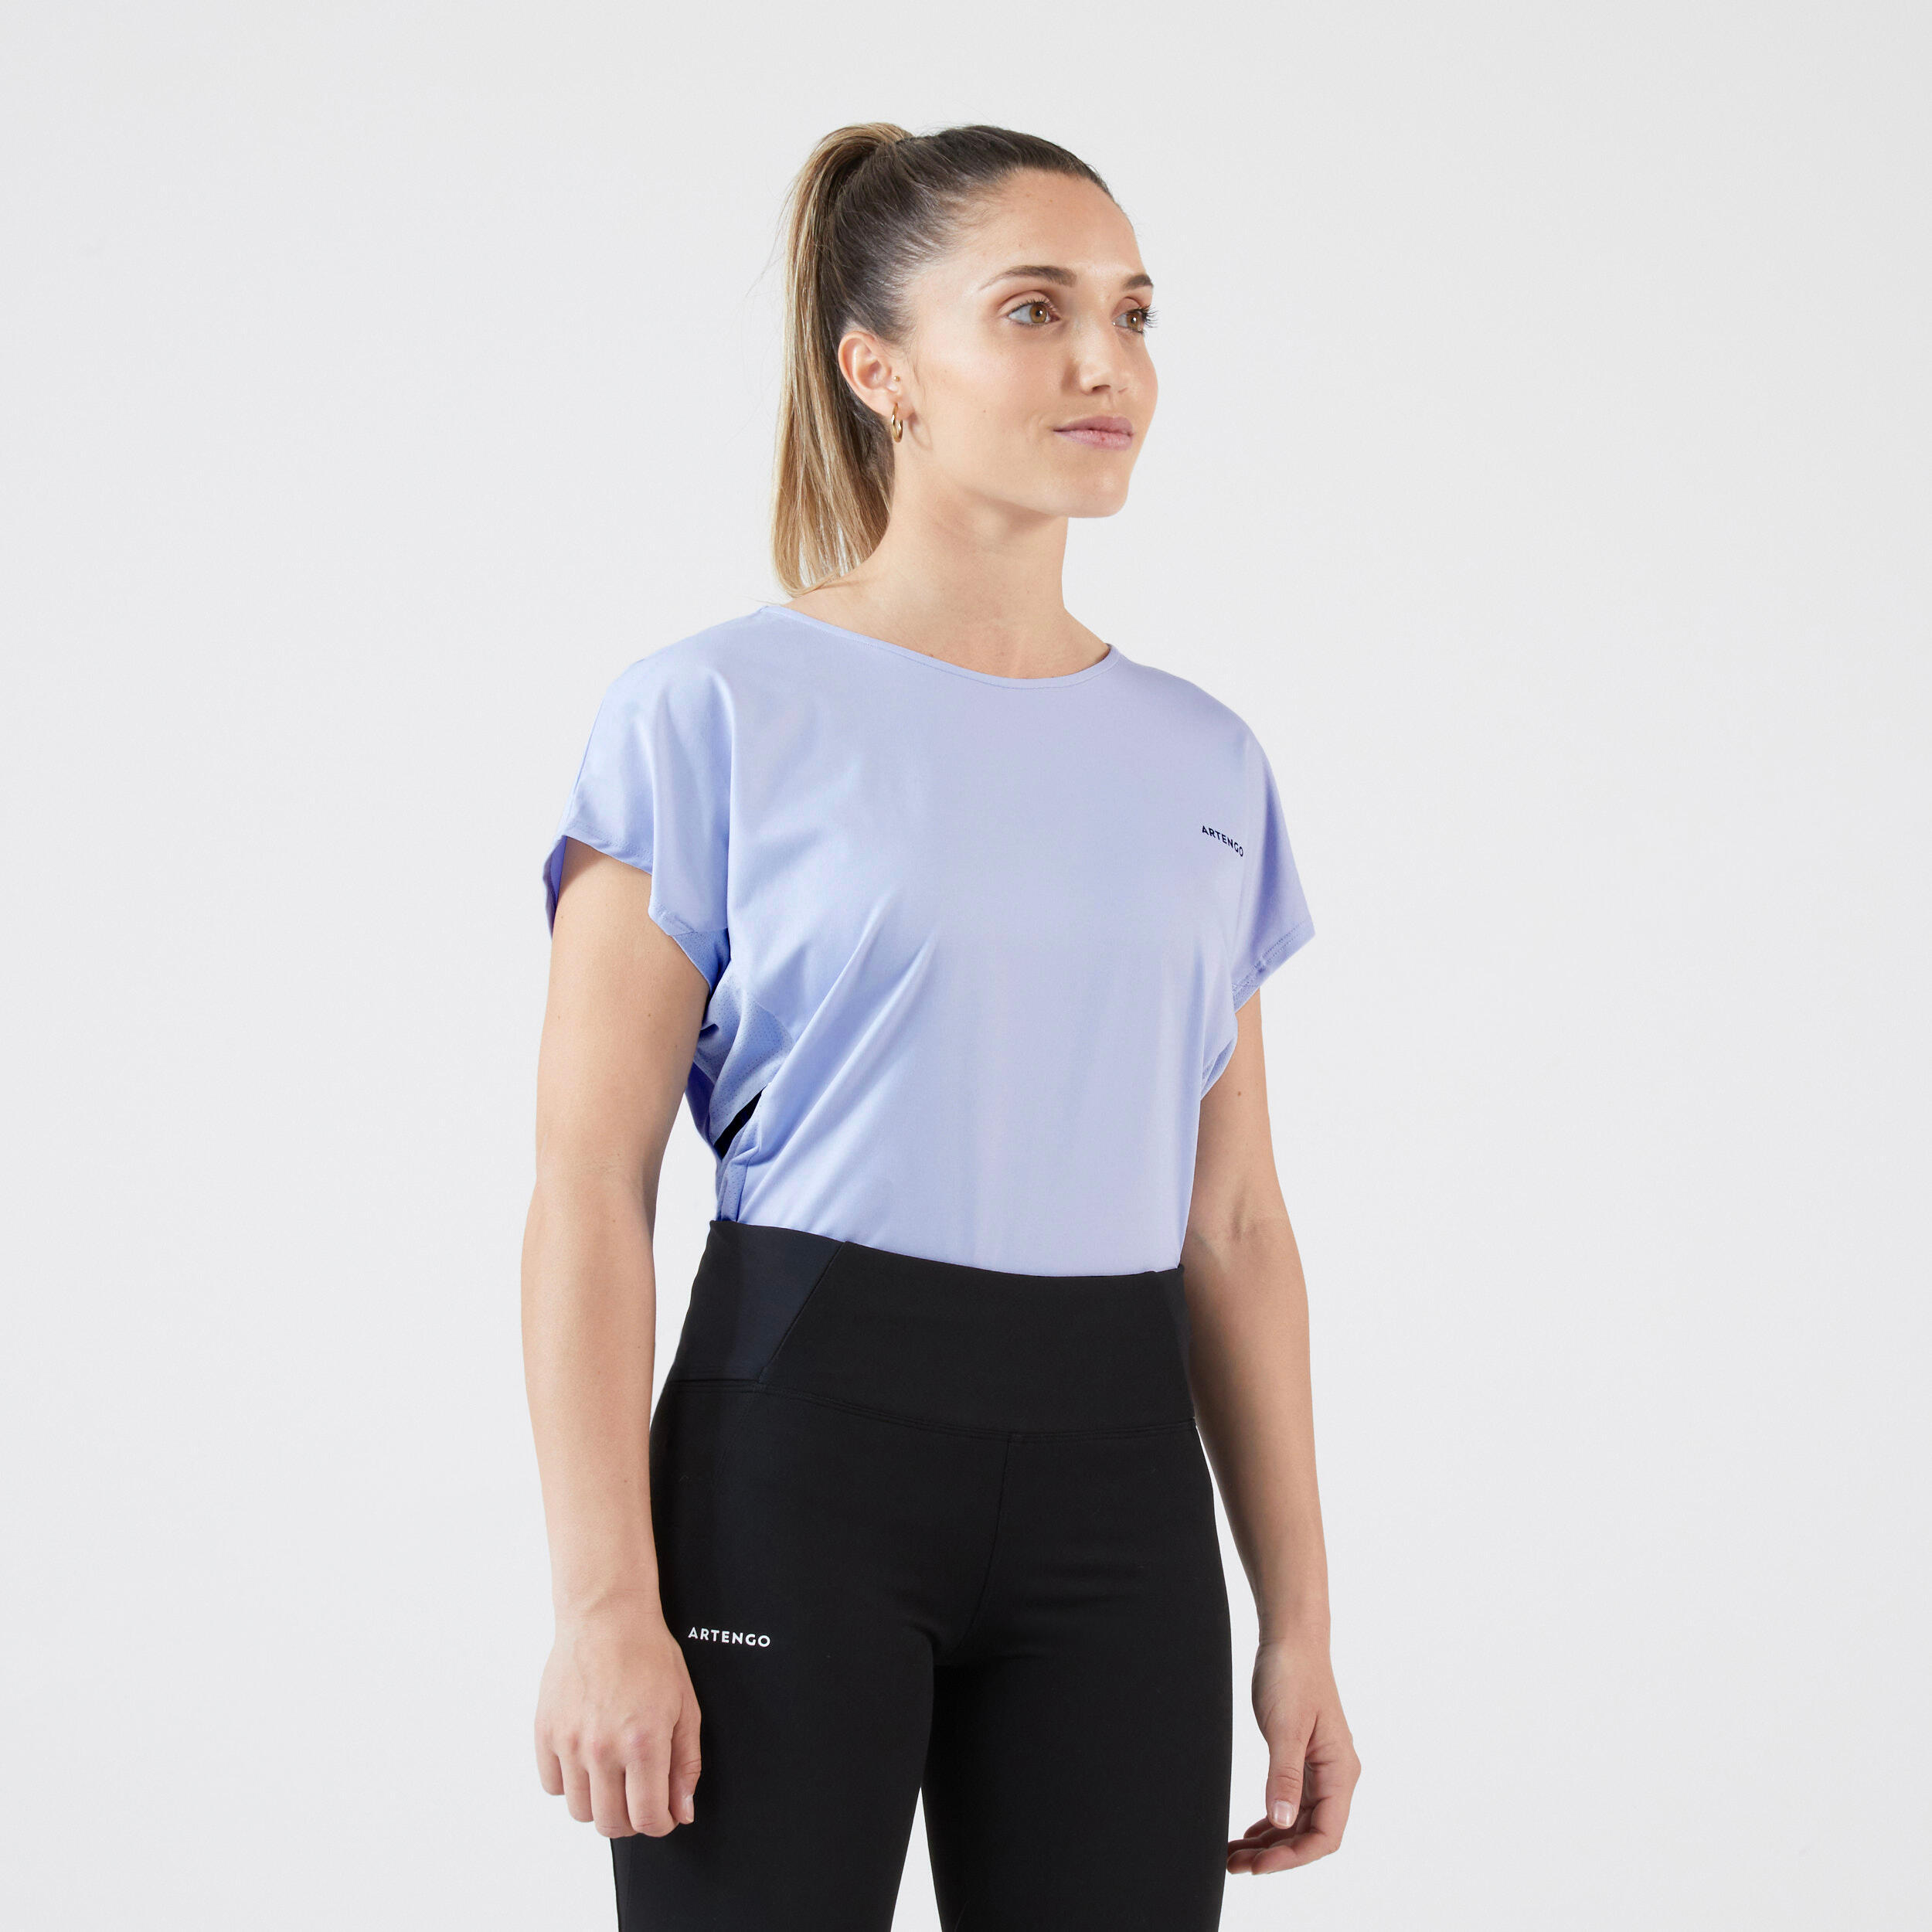 ARTENGO Women's Soft Crew Neck Tennis T-Shirt Dry 500 - Lavender Blue